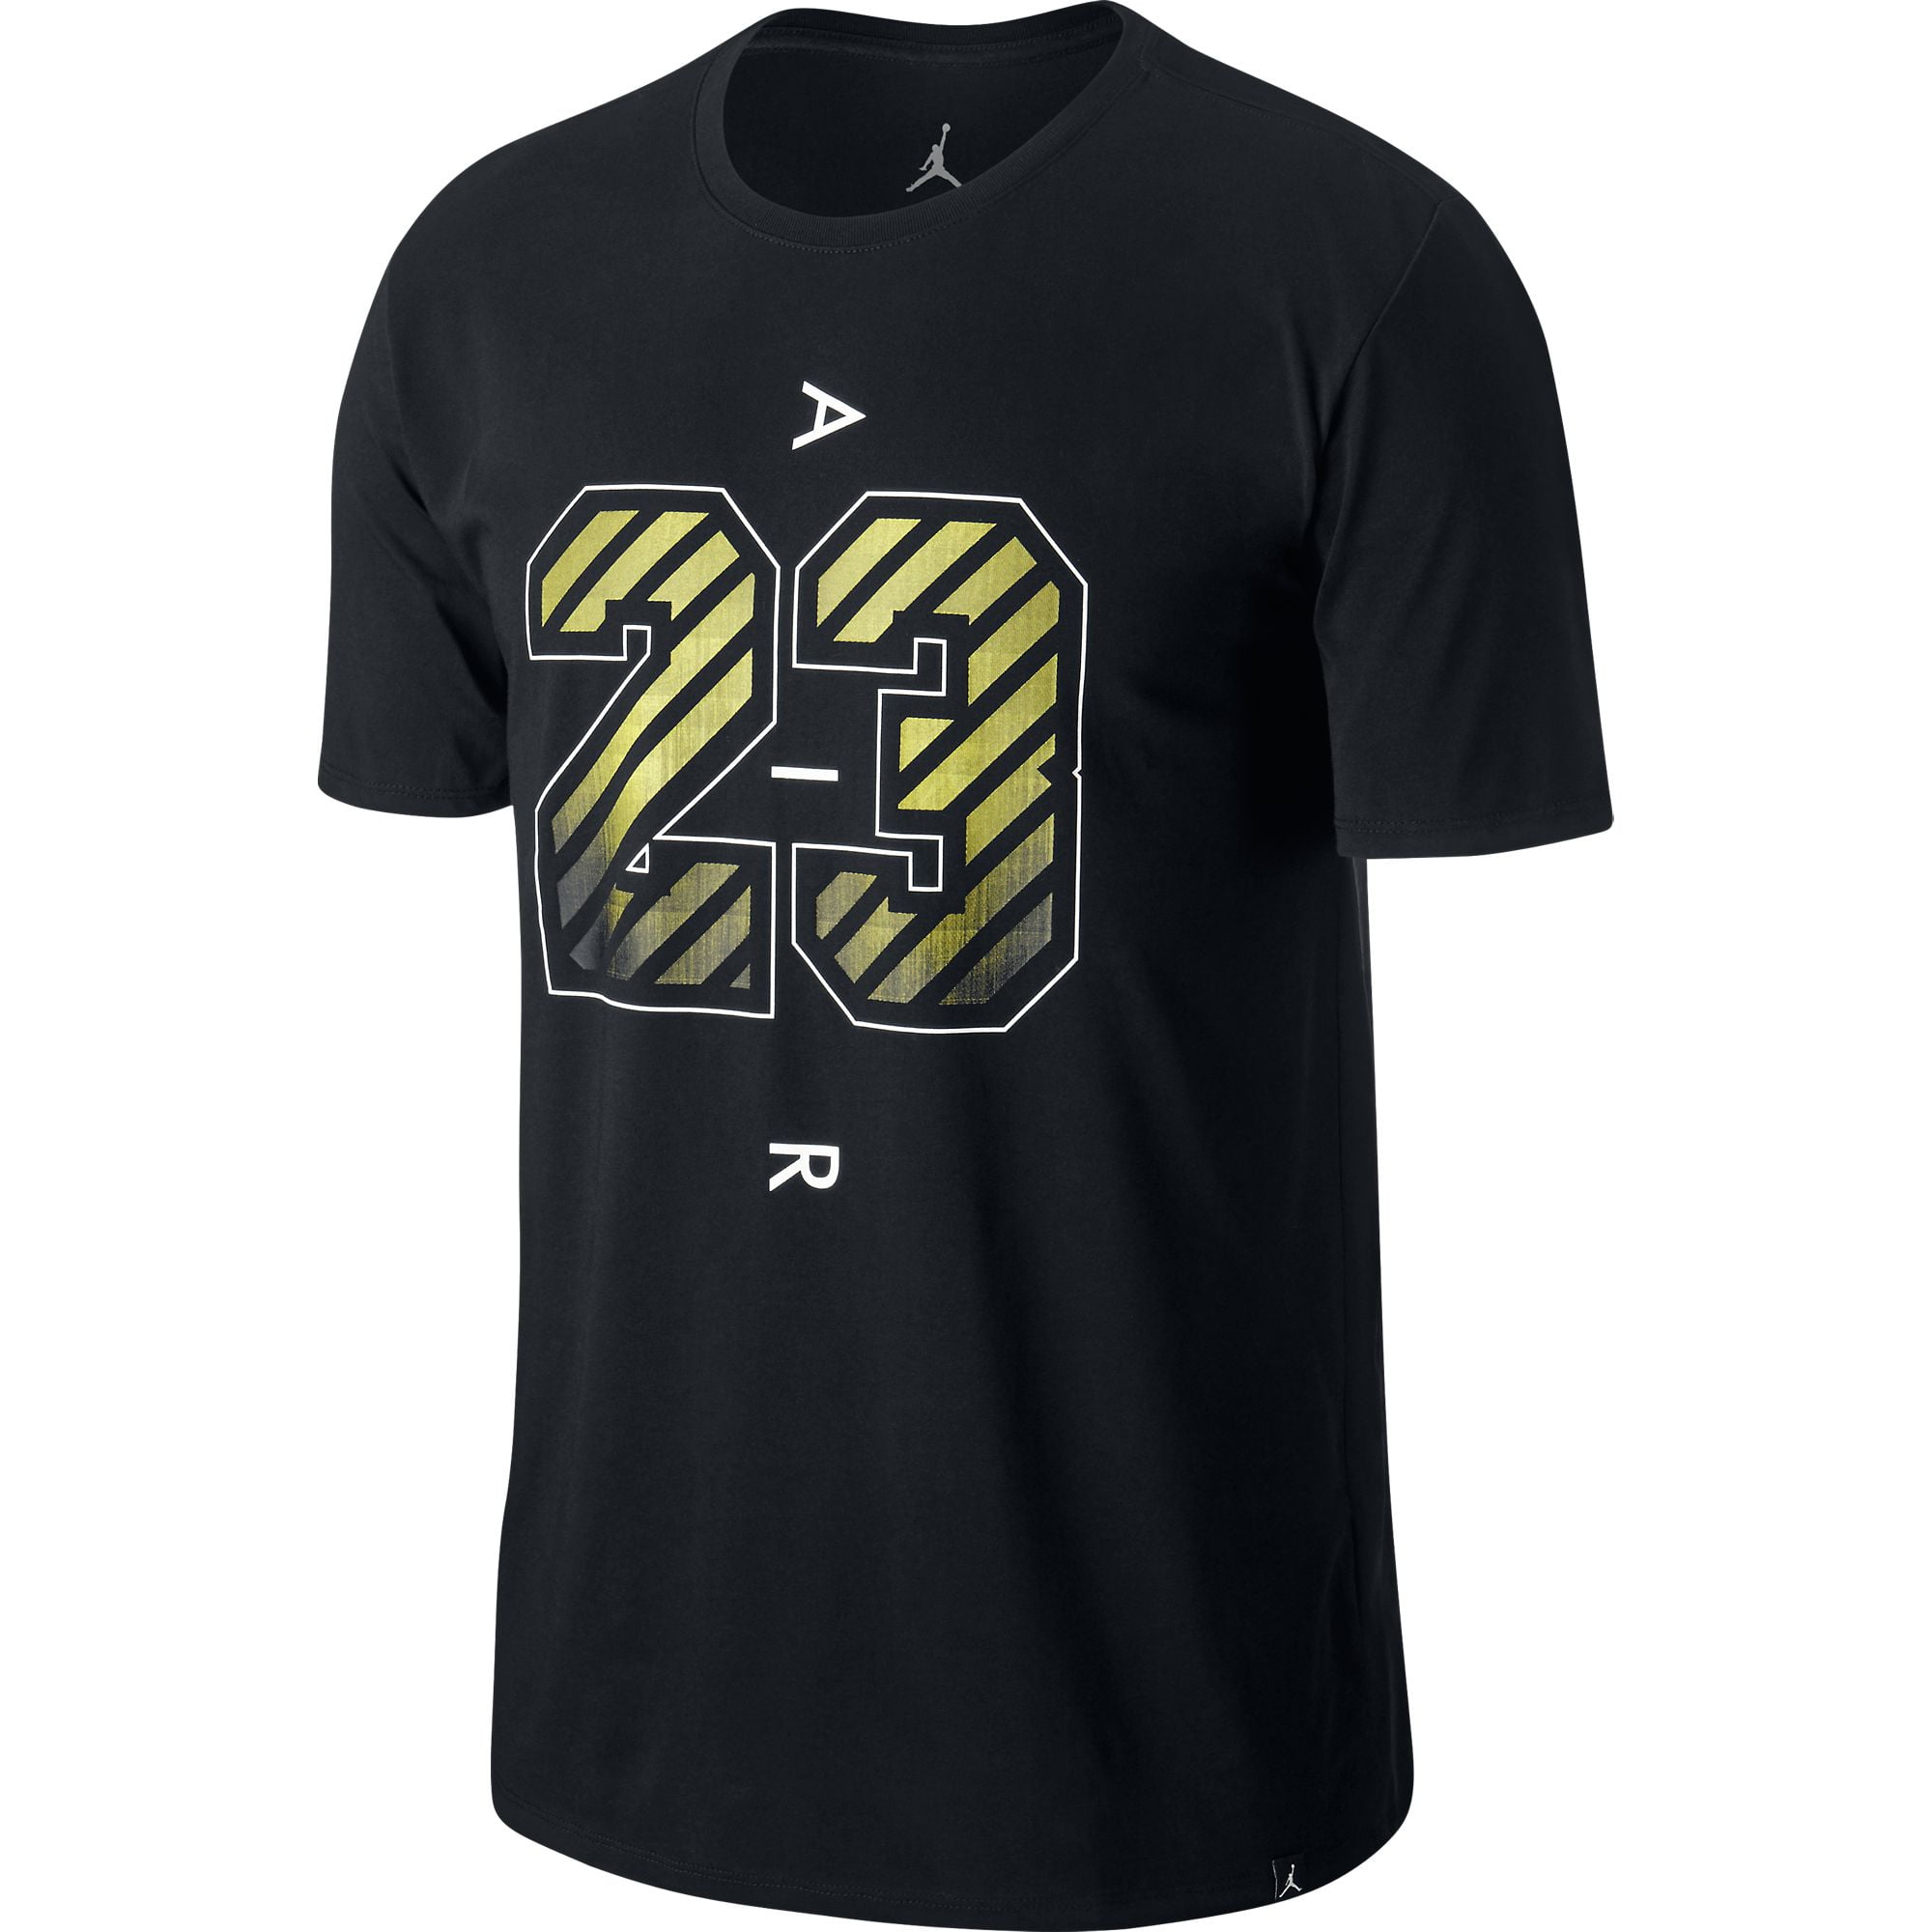 Jordan Air 23 Dry Men's Athletic Casual T-Shirt Black/Volt 843130-010 ...